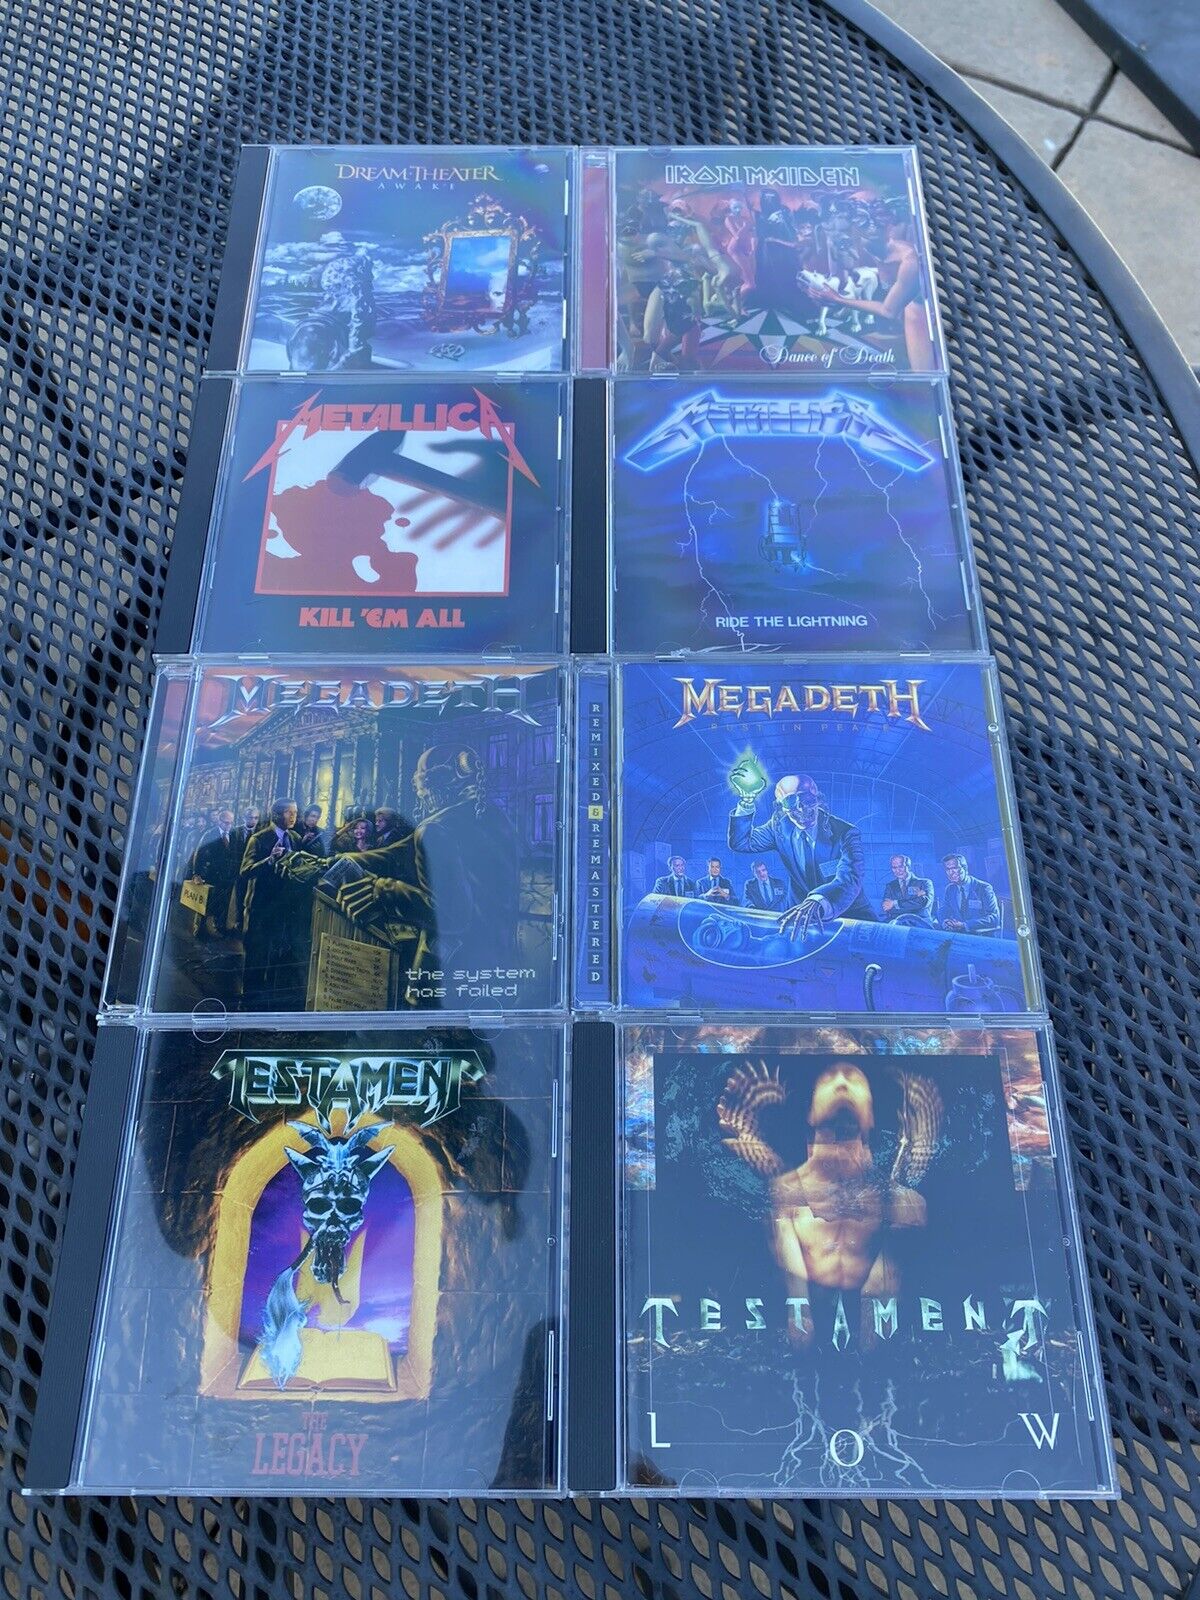 Lot of 8 metal rock CD’s Metallica Megadeth Testament Iron Maiden Dream Theater